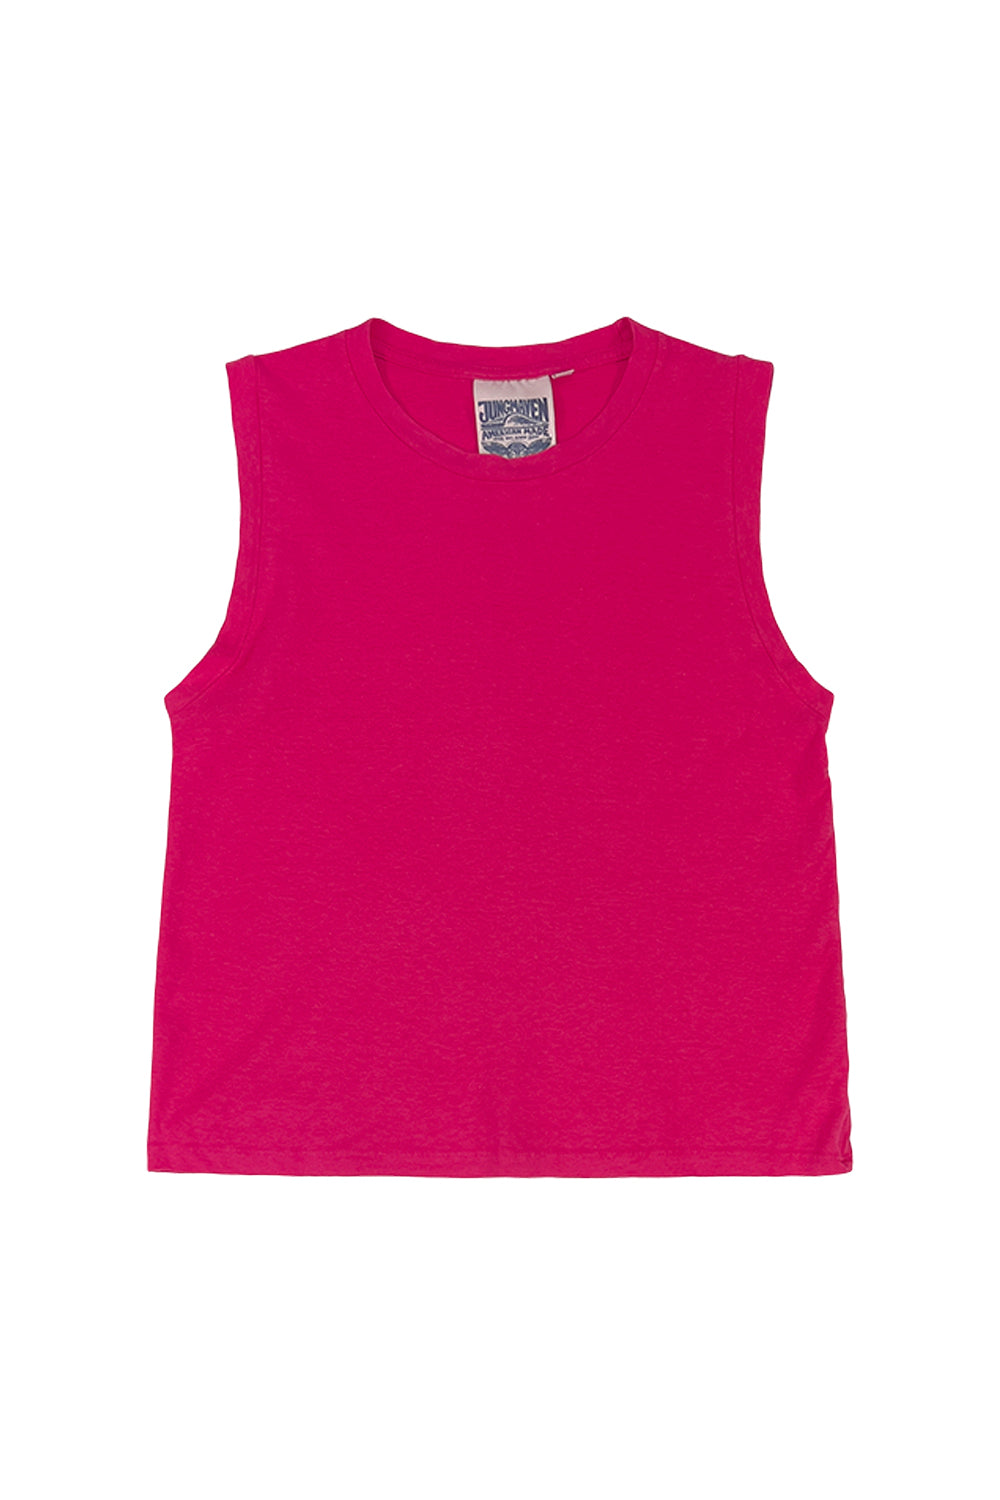 Phoenix Muscle Tee | Jungmaven Hemp Clothing & Accessories / Color: Pink Grapefruit